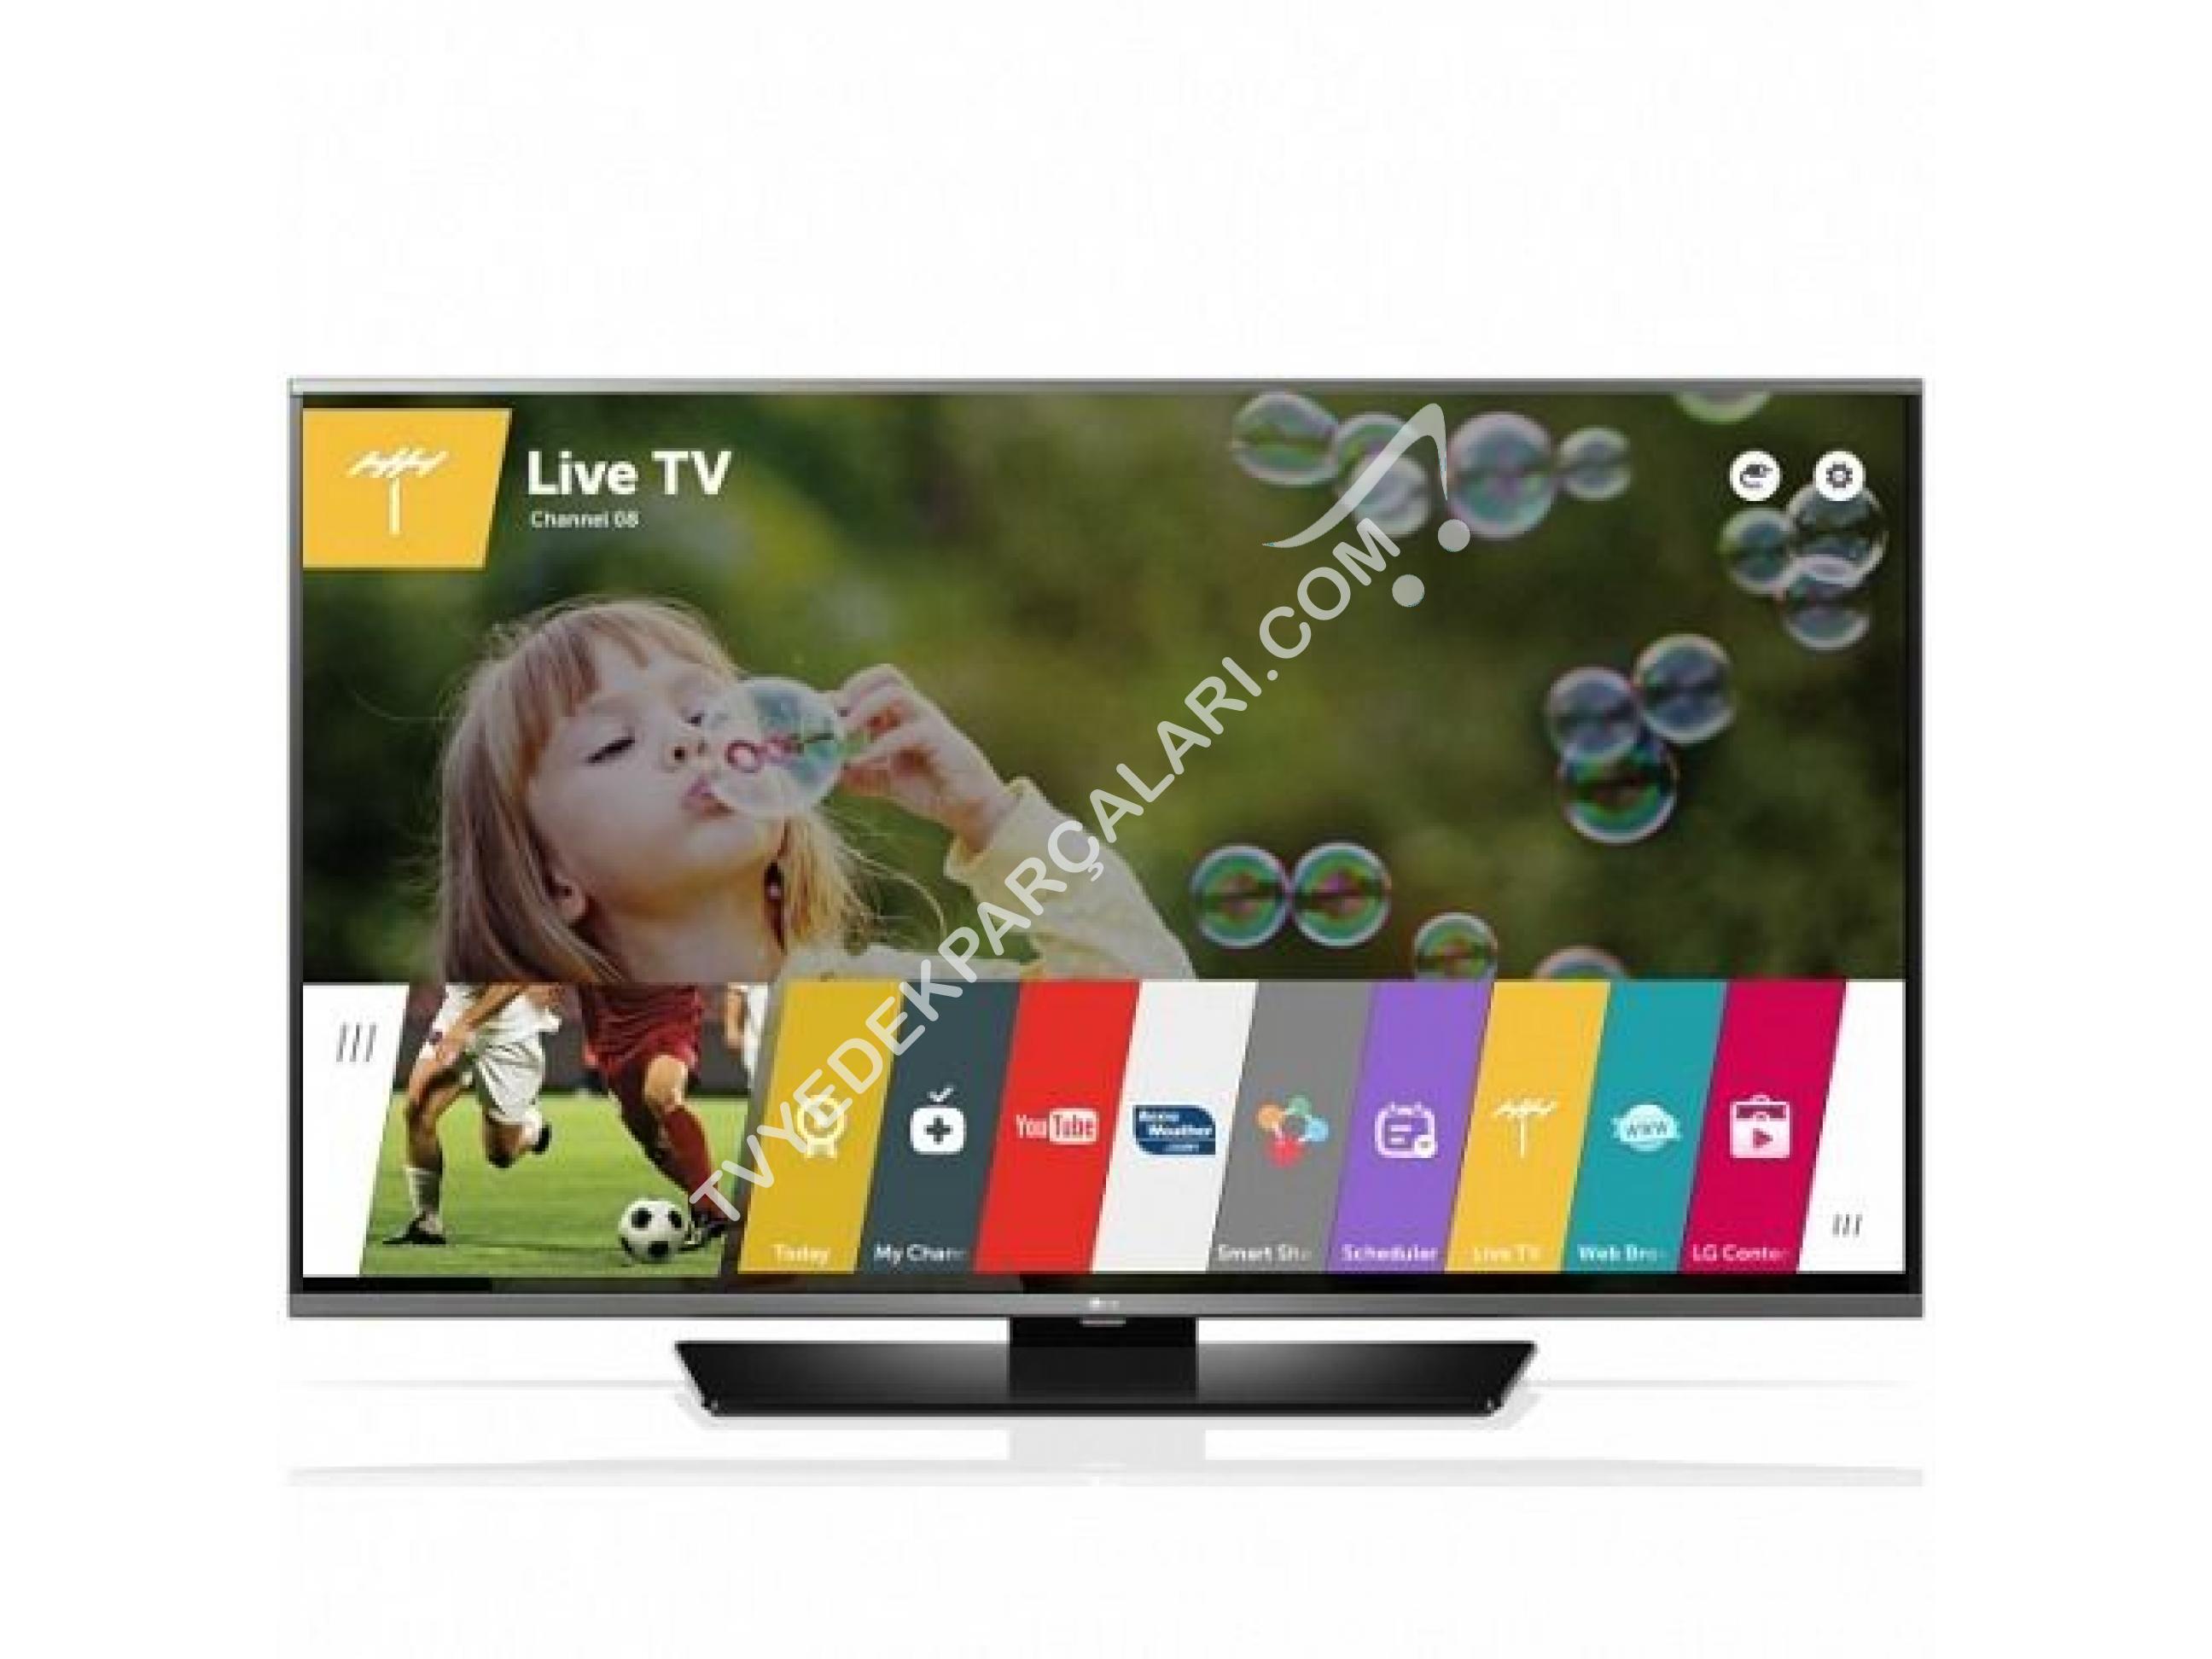 82 EKRAN LG 32LF630V Full HD Dahili Uydulu Smart webOS 2.0 TV